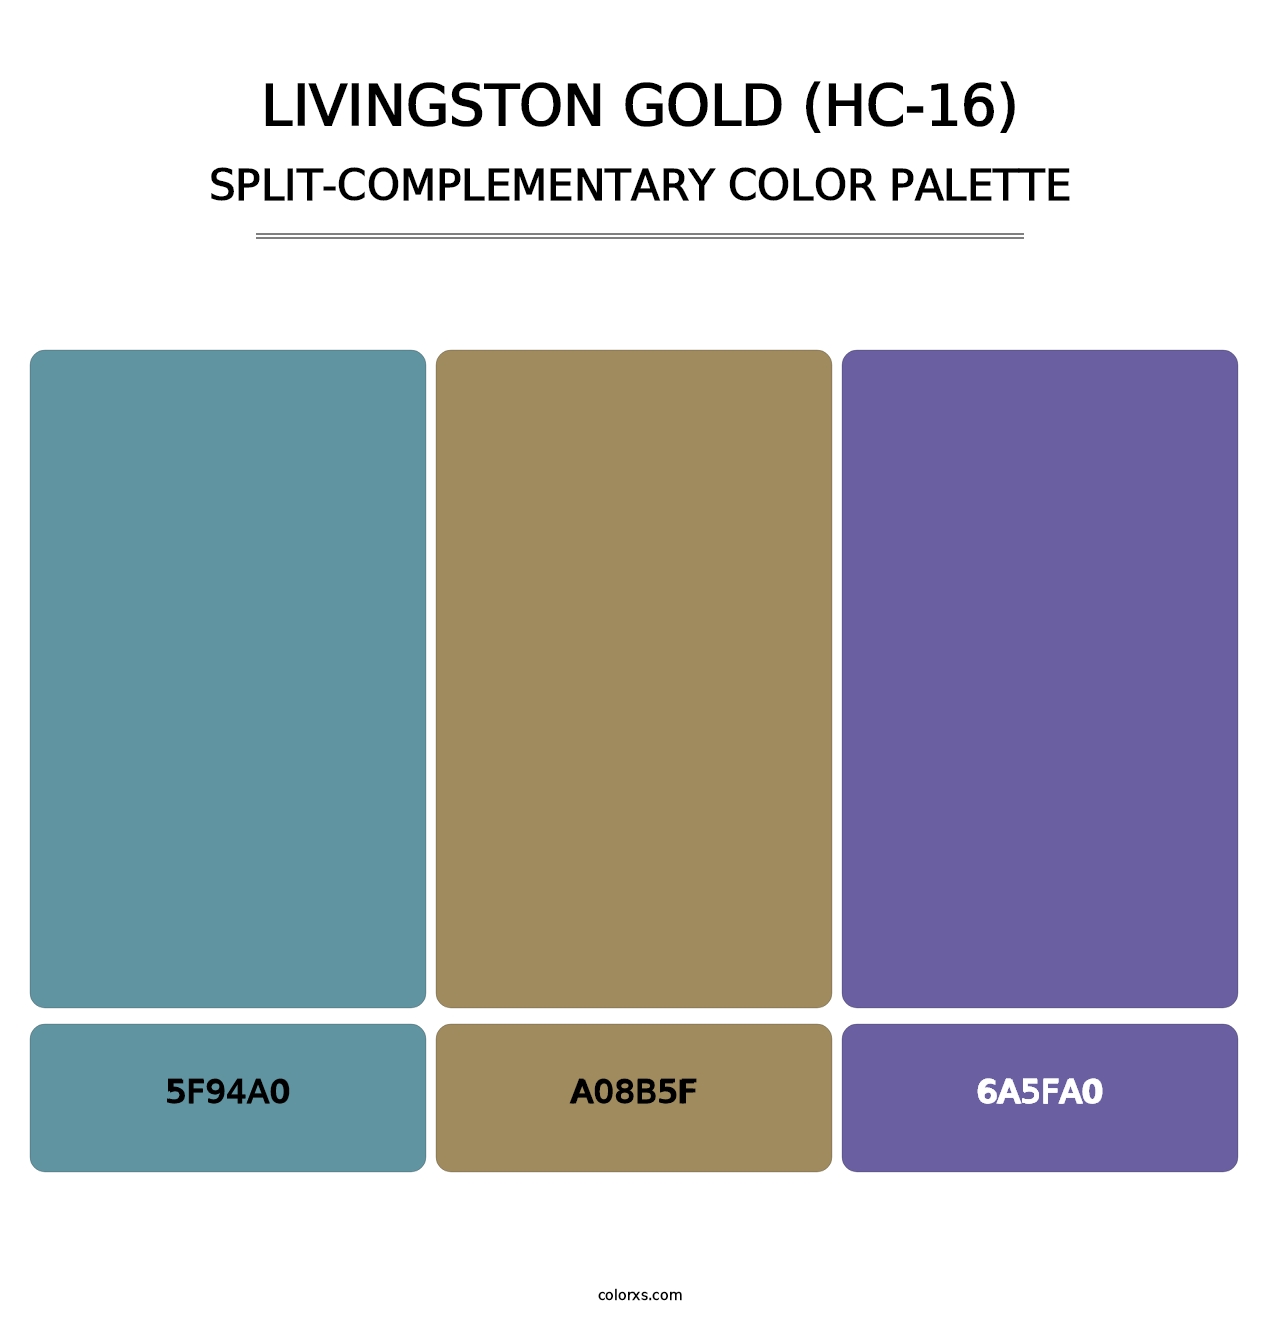 Livingston Gold (HC-16) - Split-Complementary Color Palette